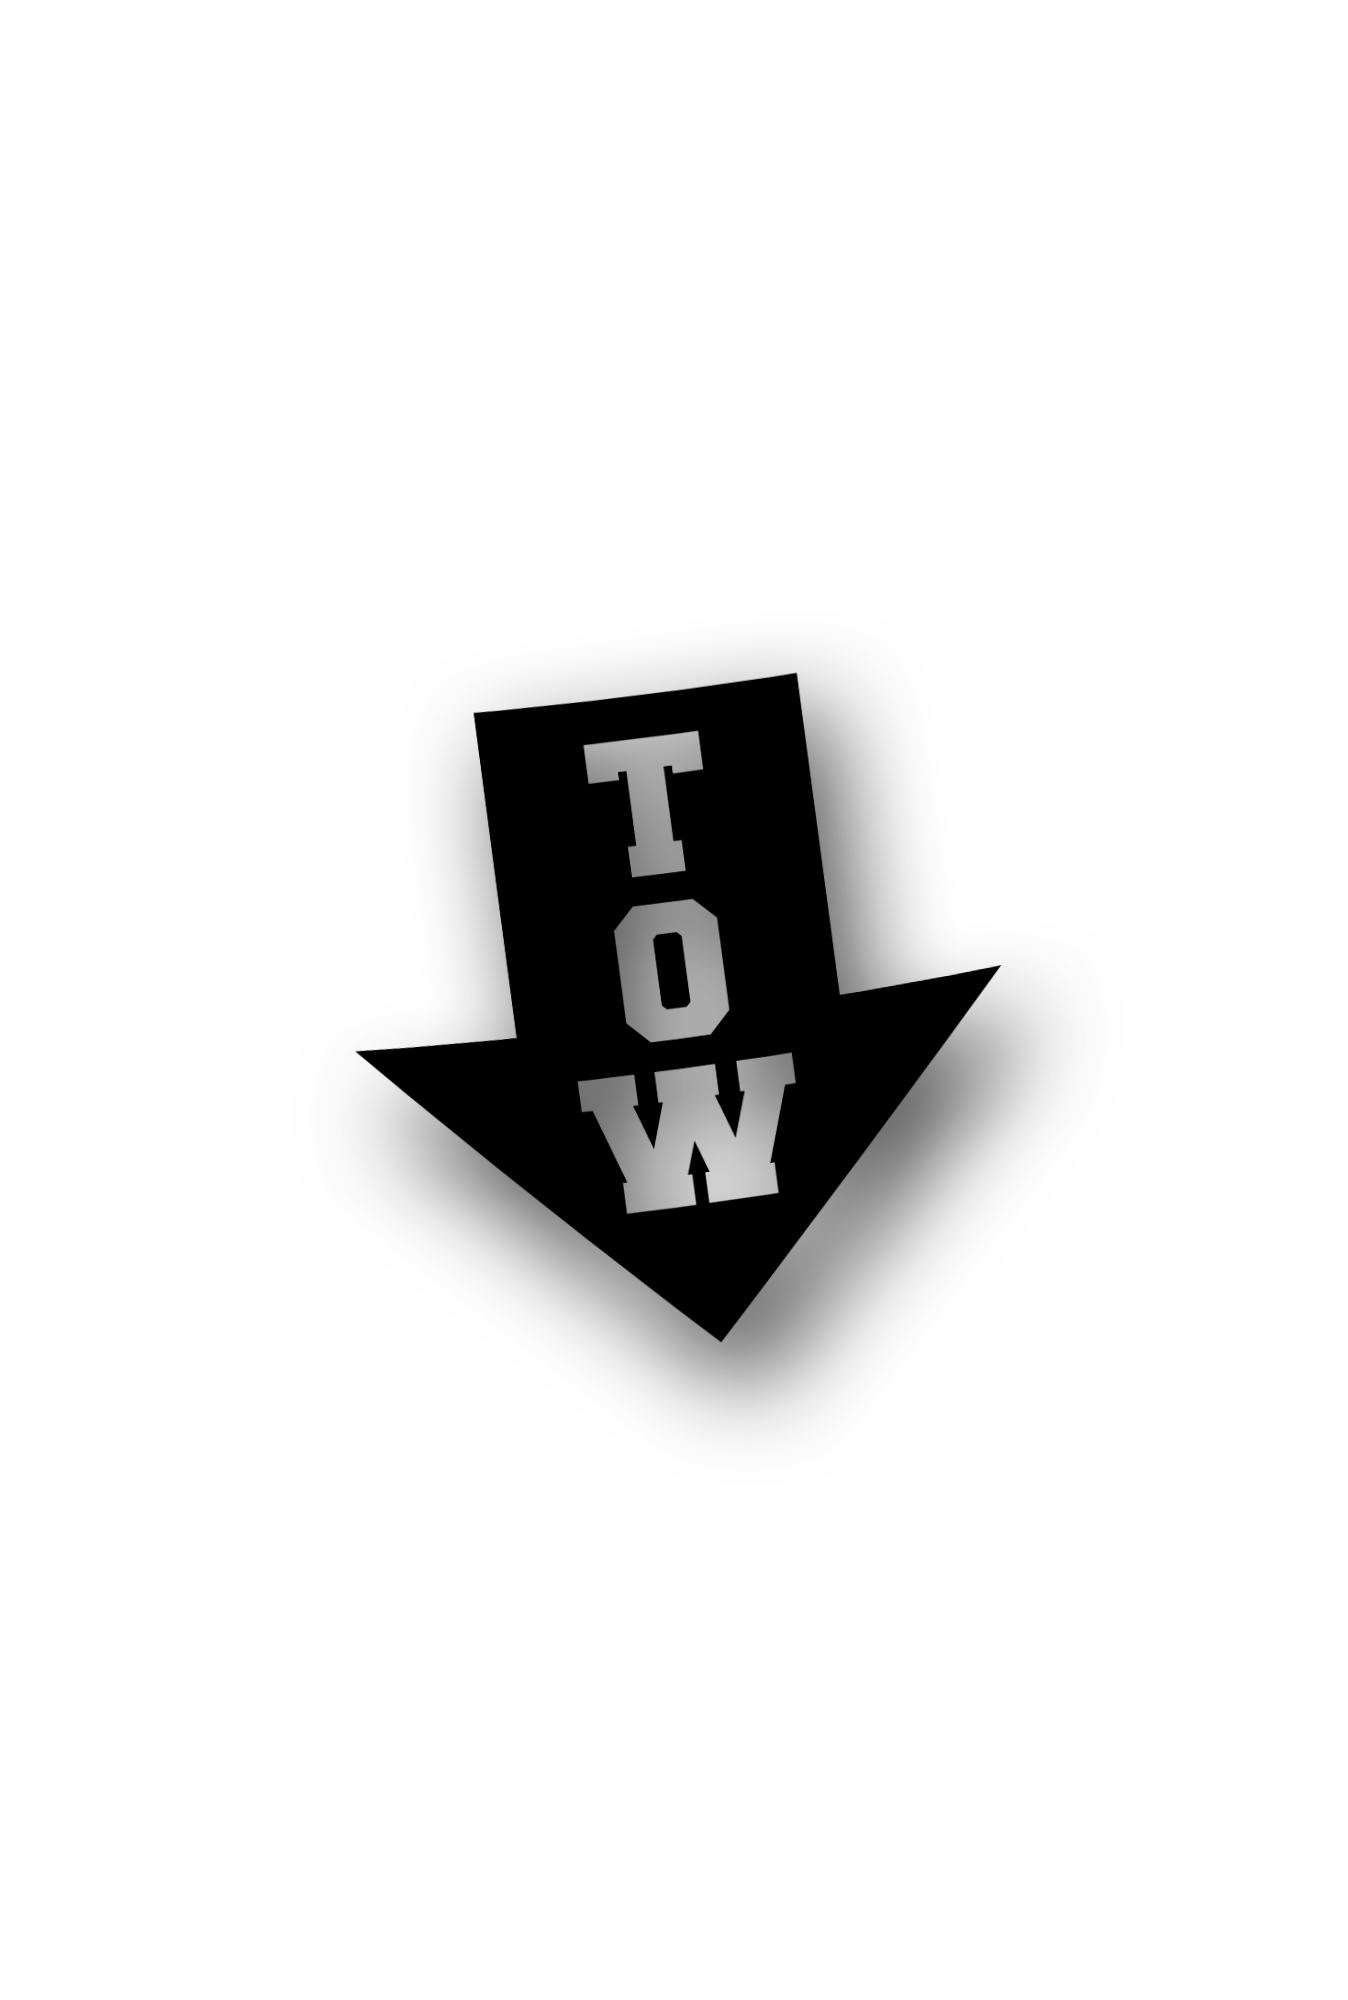 ''Tow'' - Plotted Vinyl Sticker